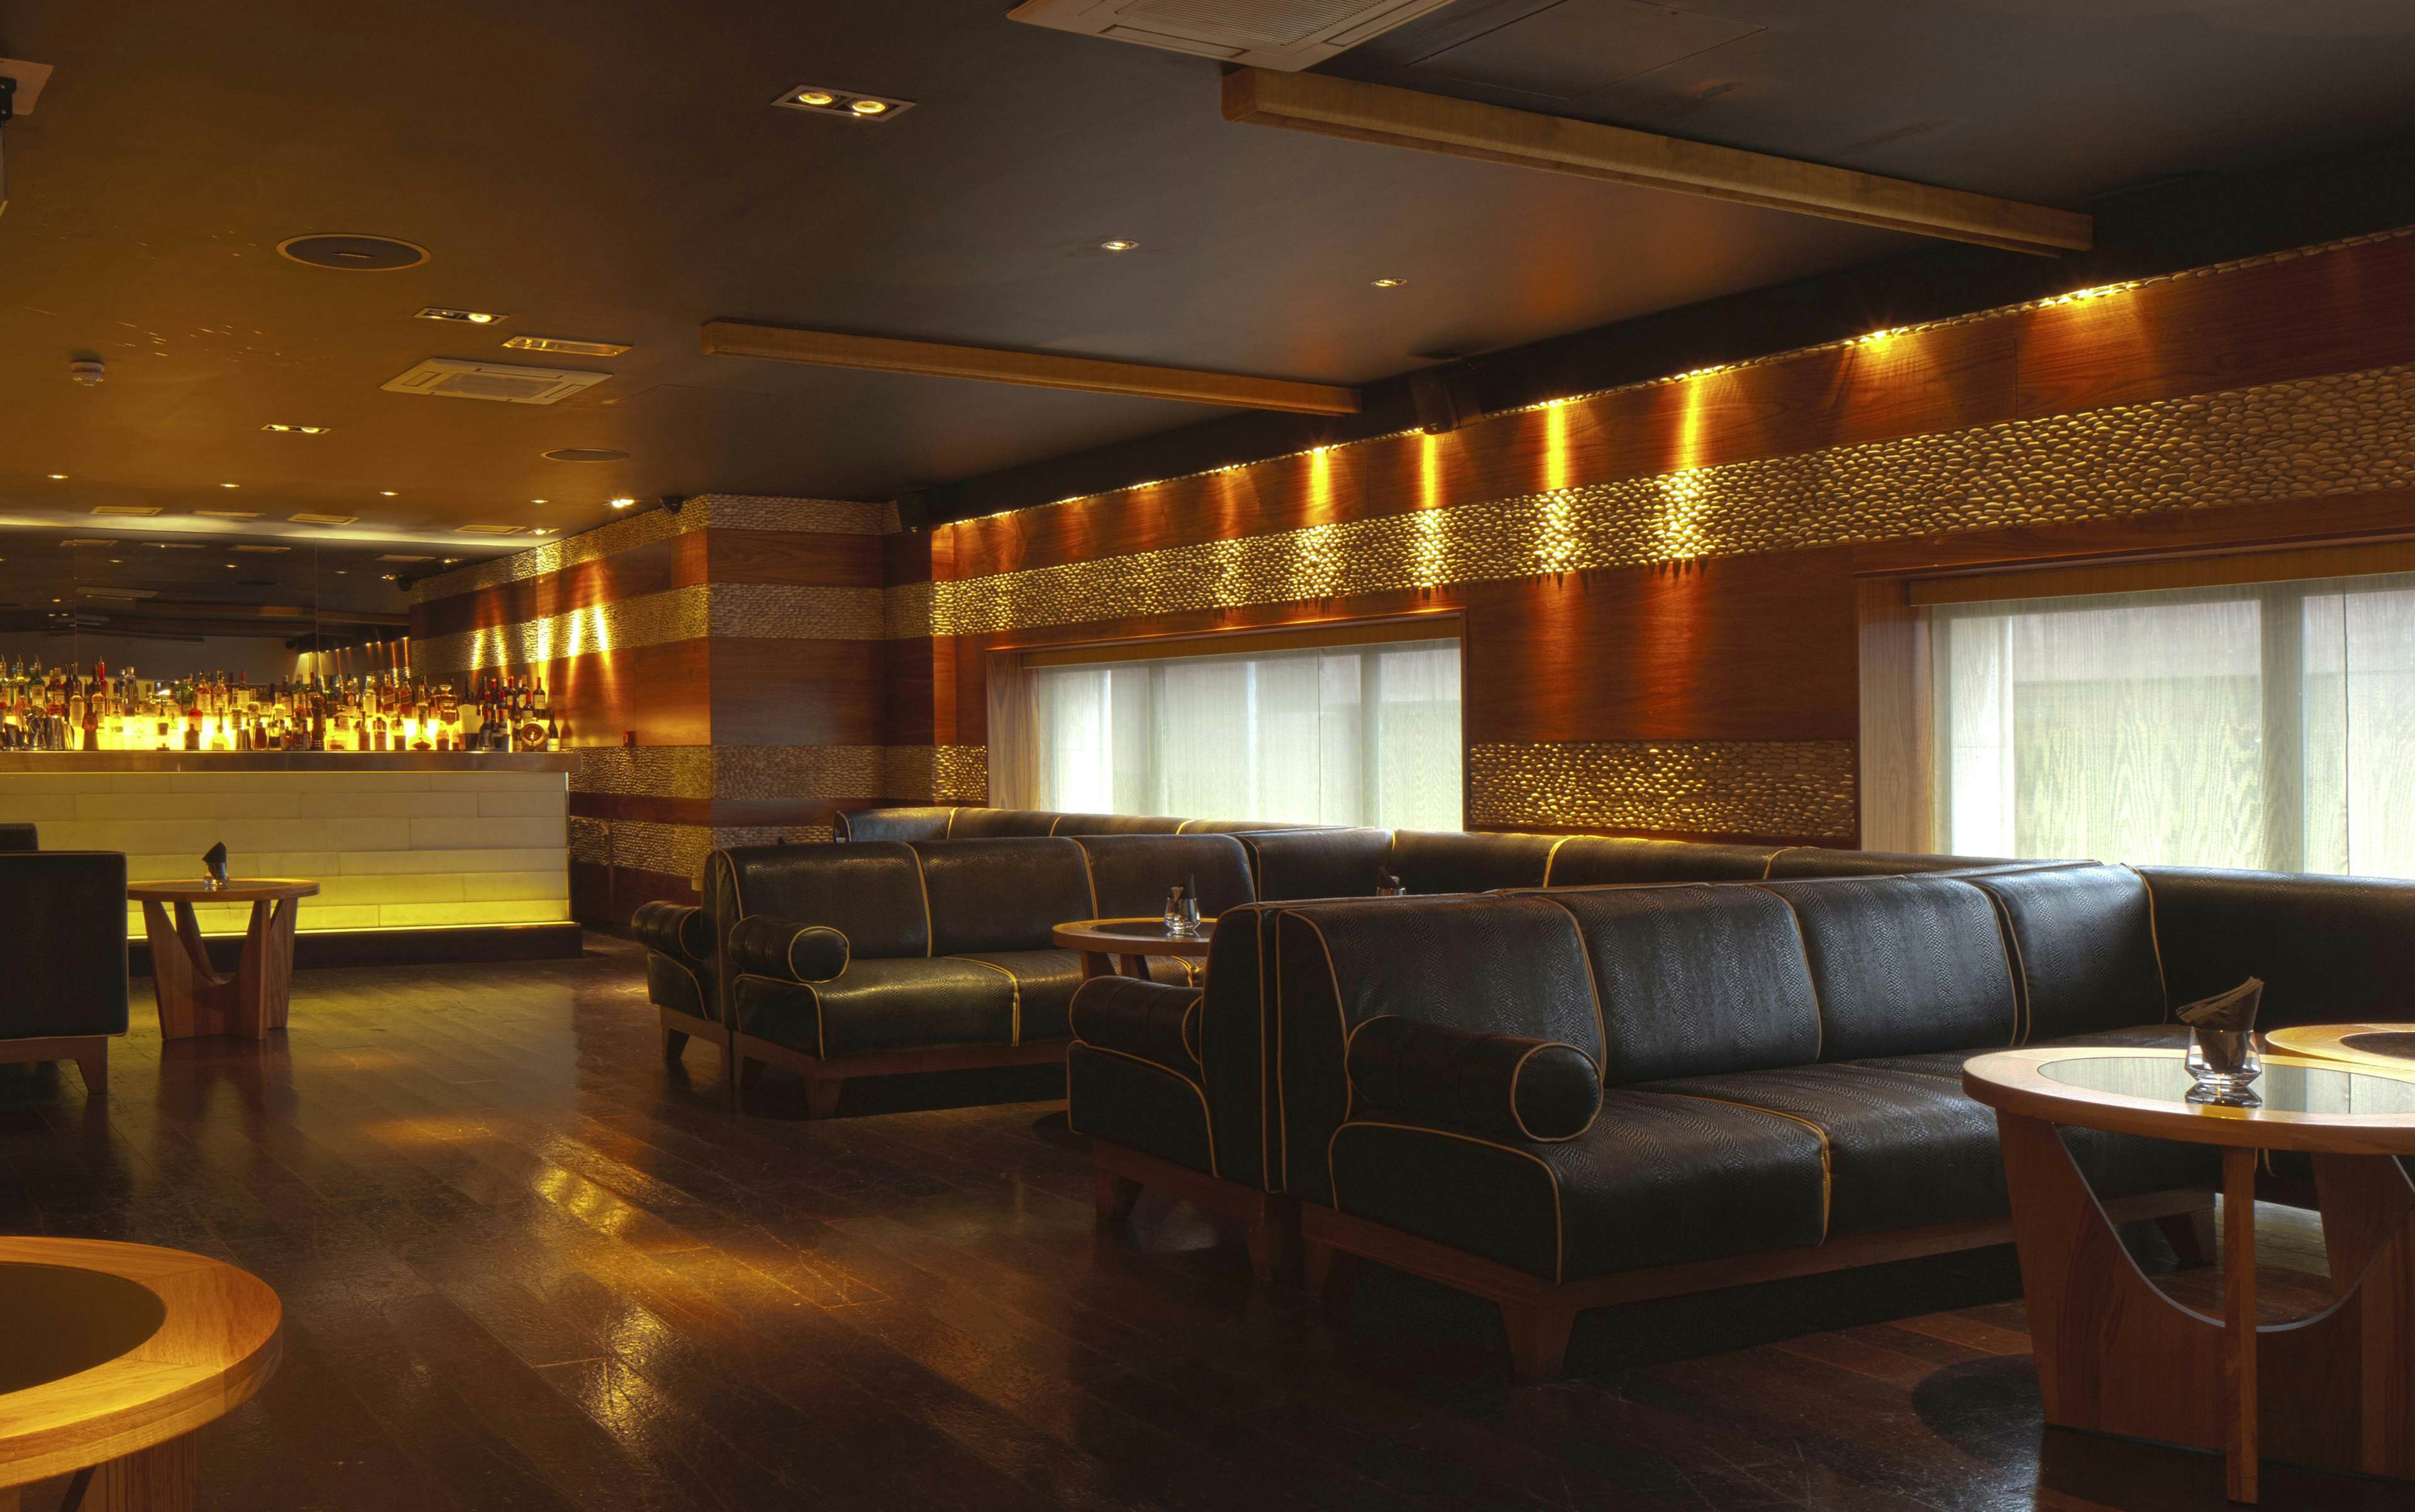 Mint Leaf Lounge - Mezzanine Bar image 1